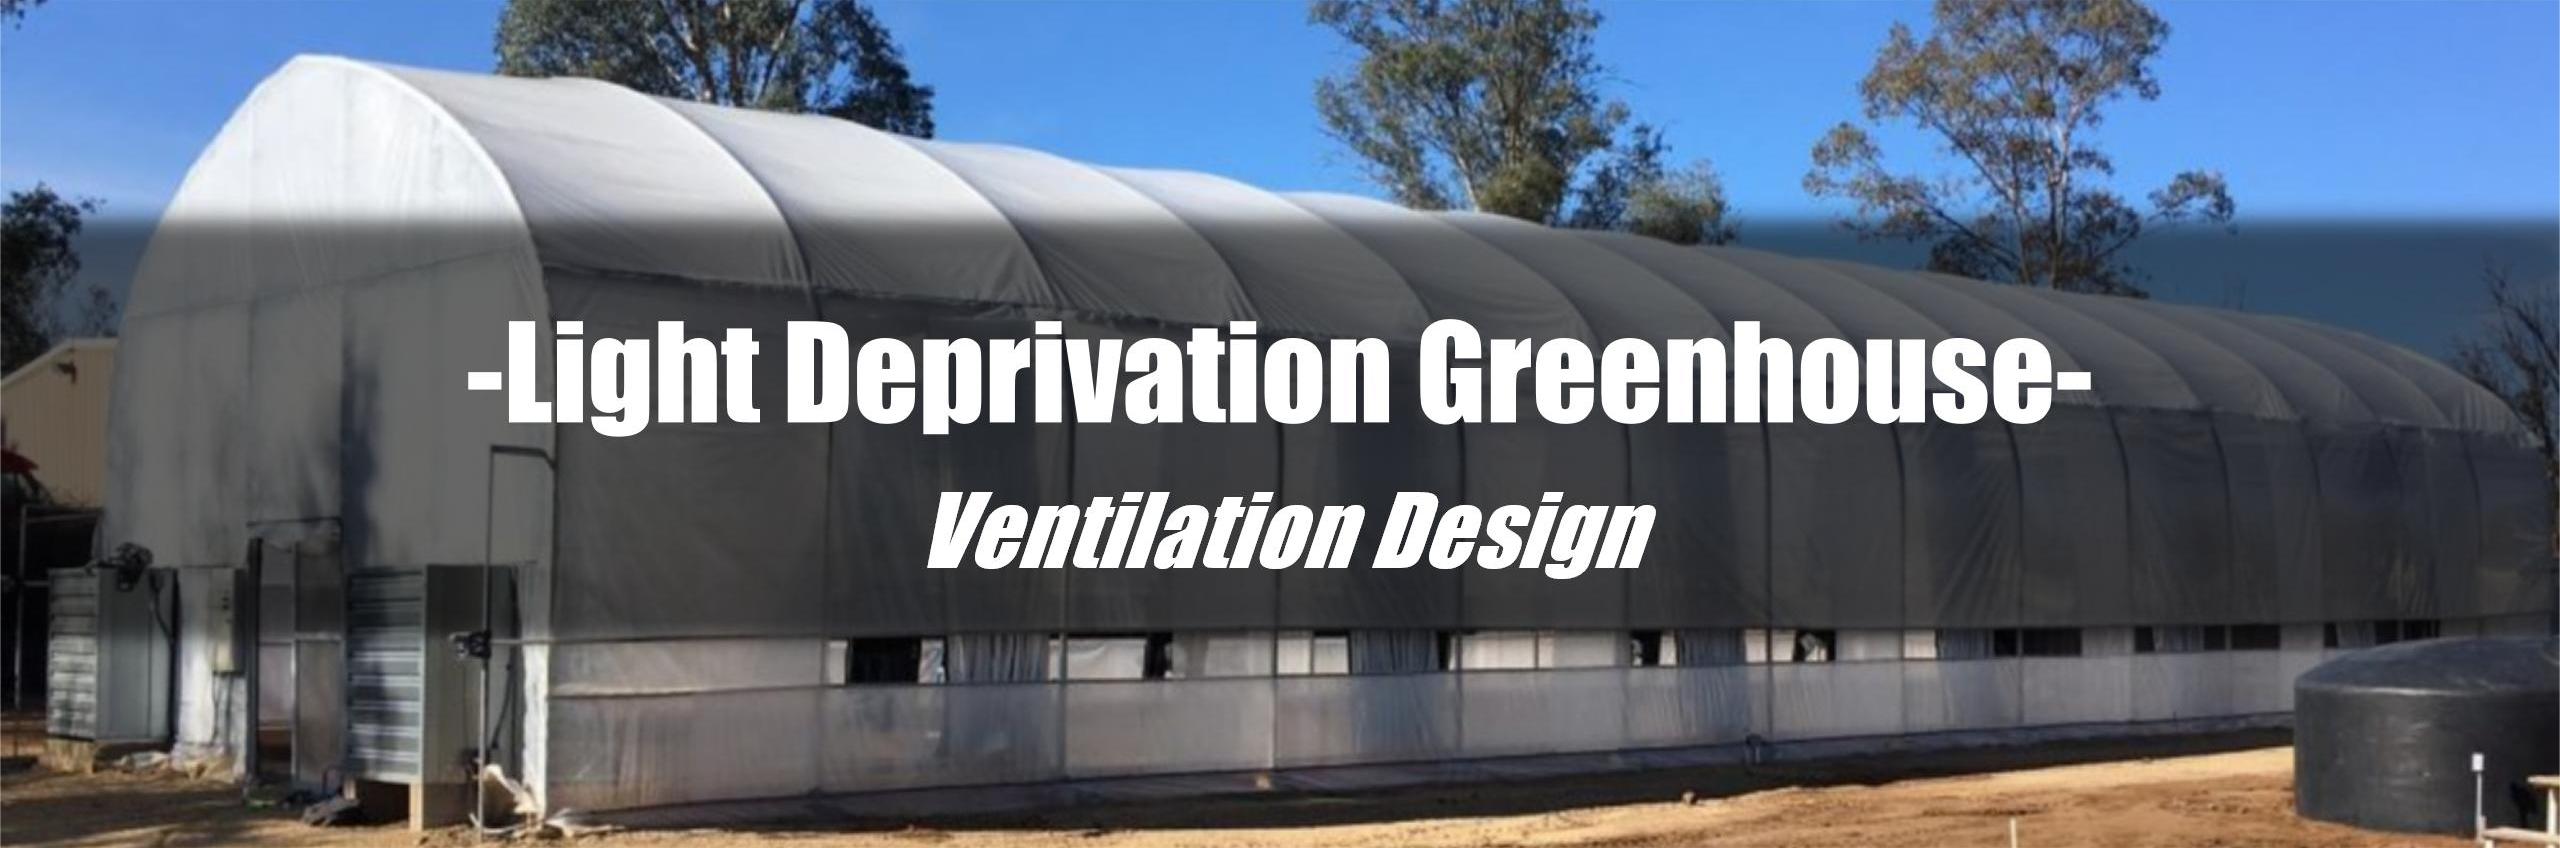 I-P1-light deprivation greenhouse